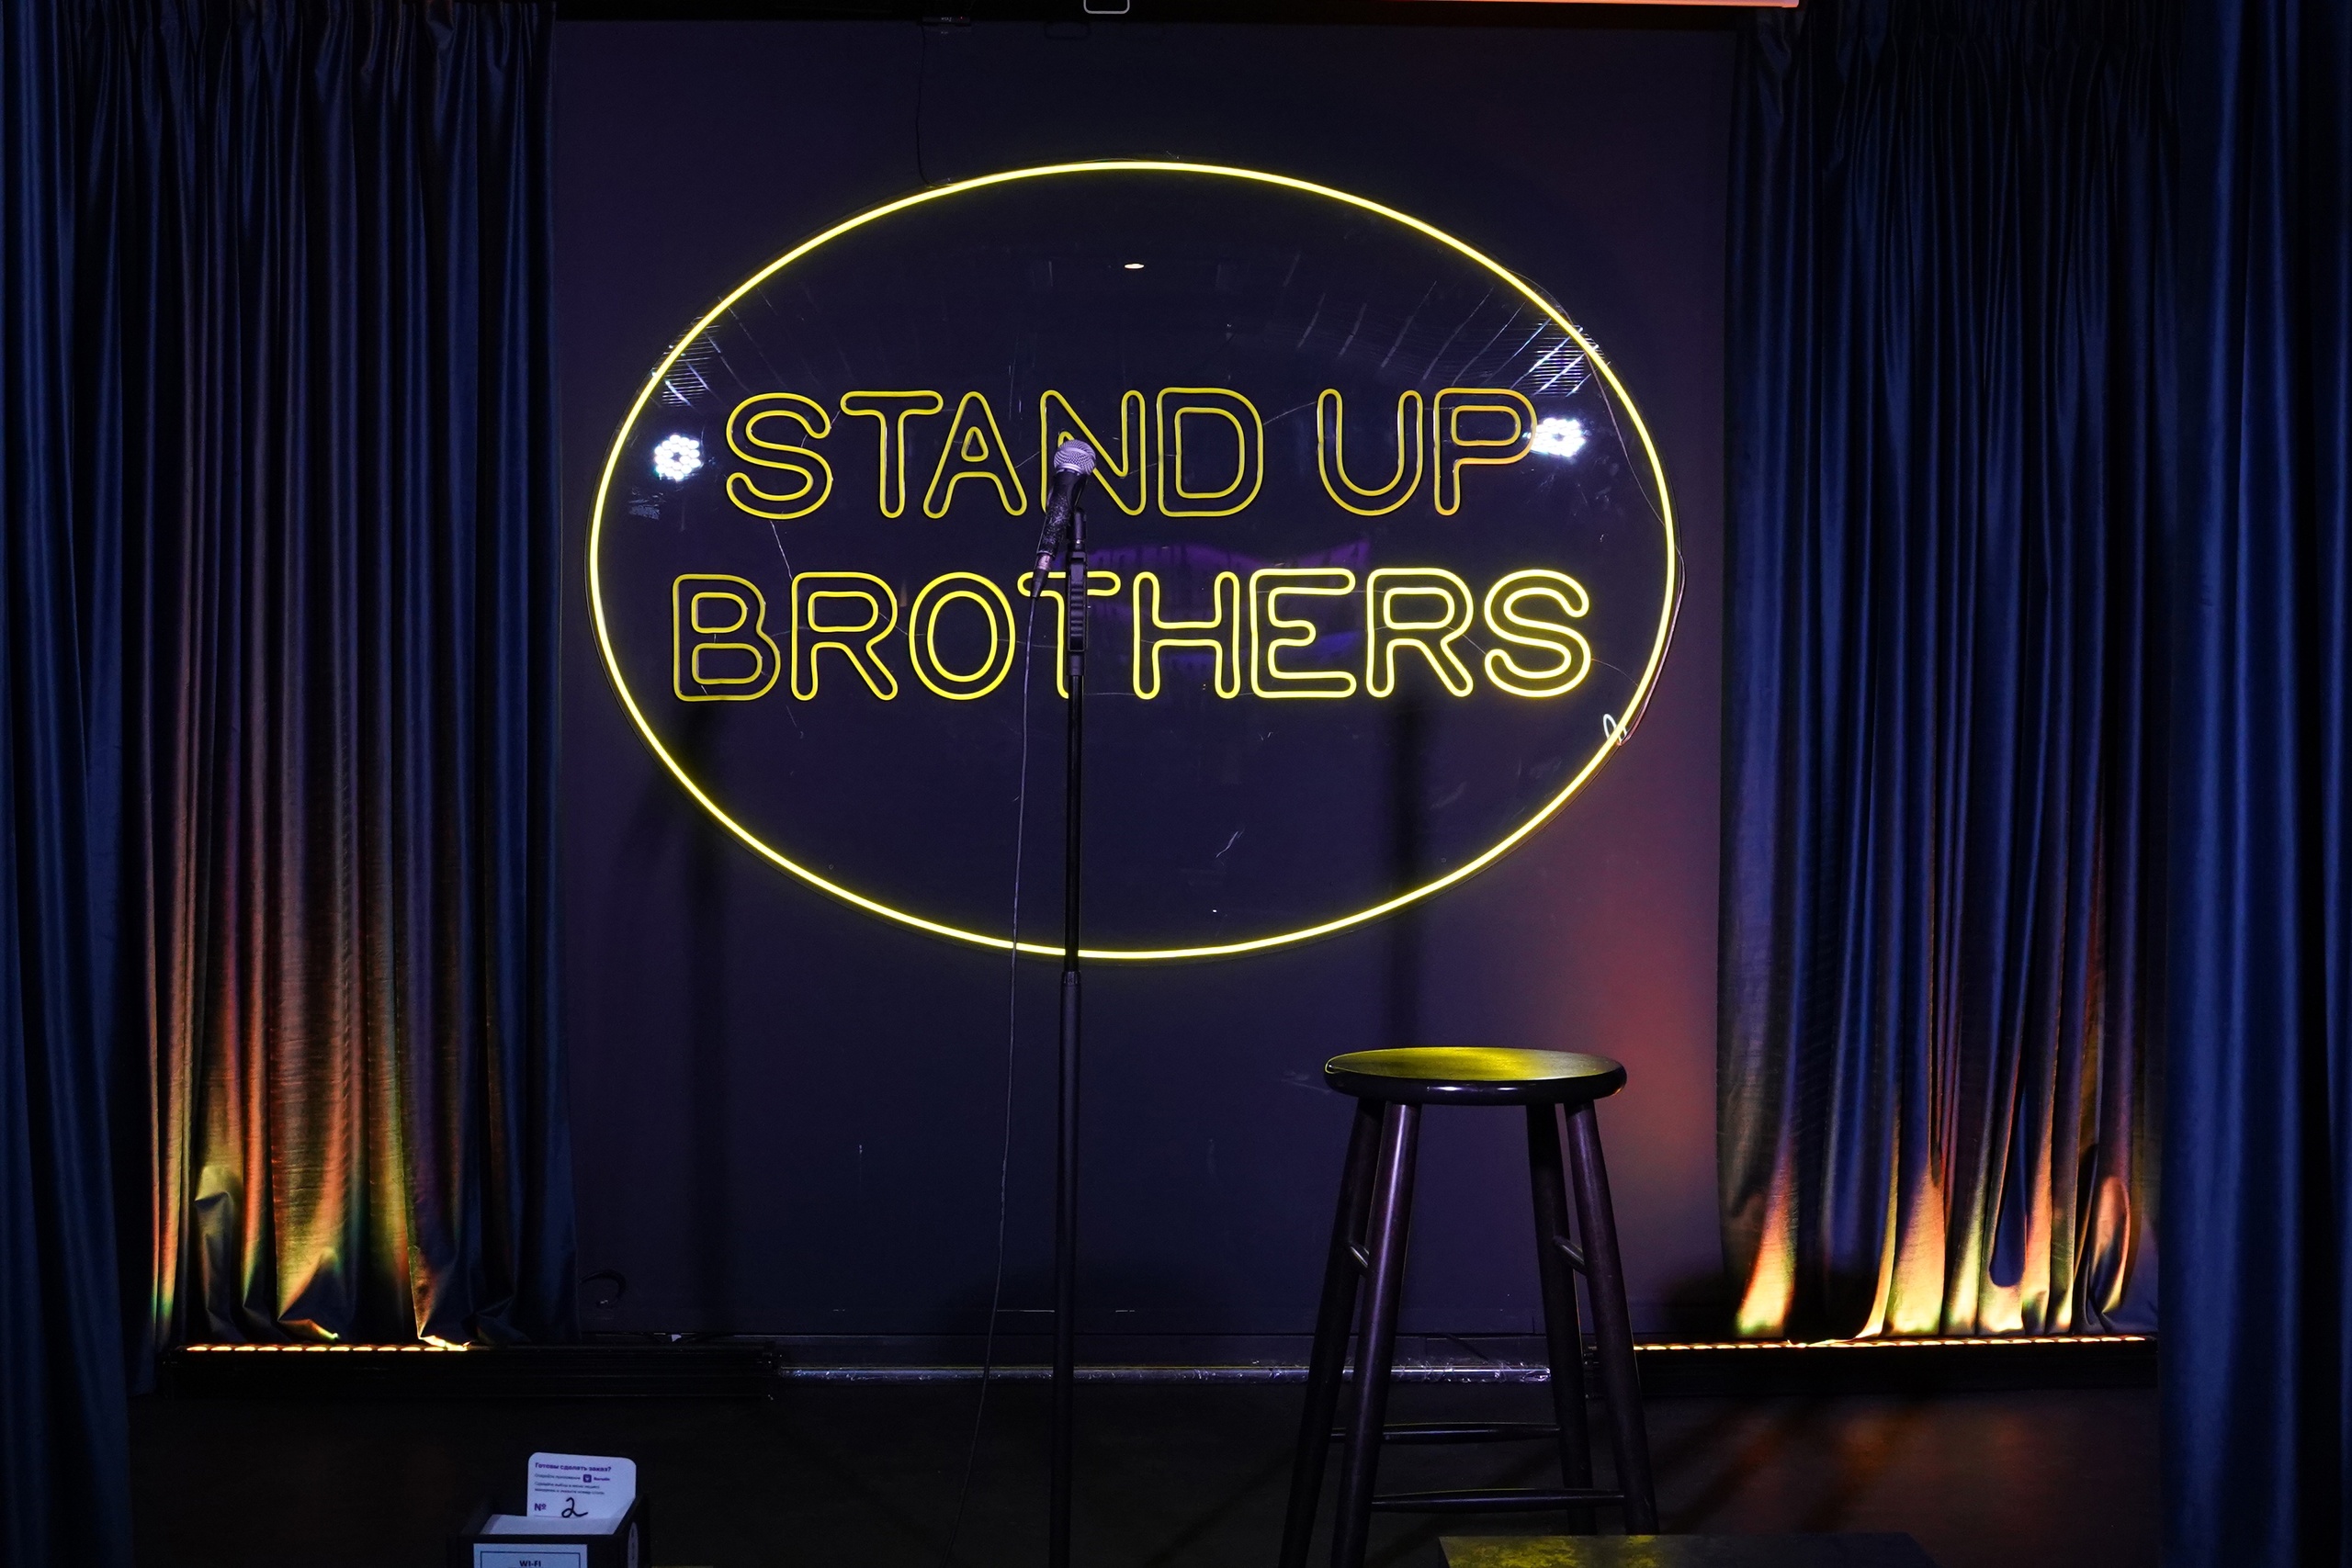 Большой Stand-up-концерт в клубе Stand Up Brothers со скидкой 20%